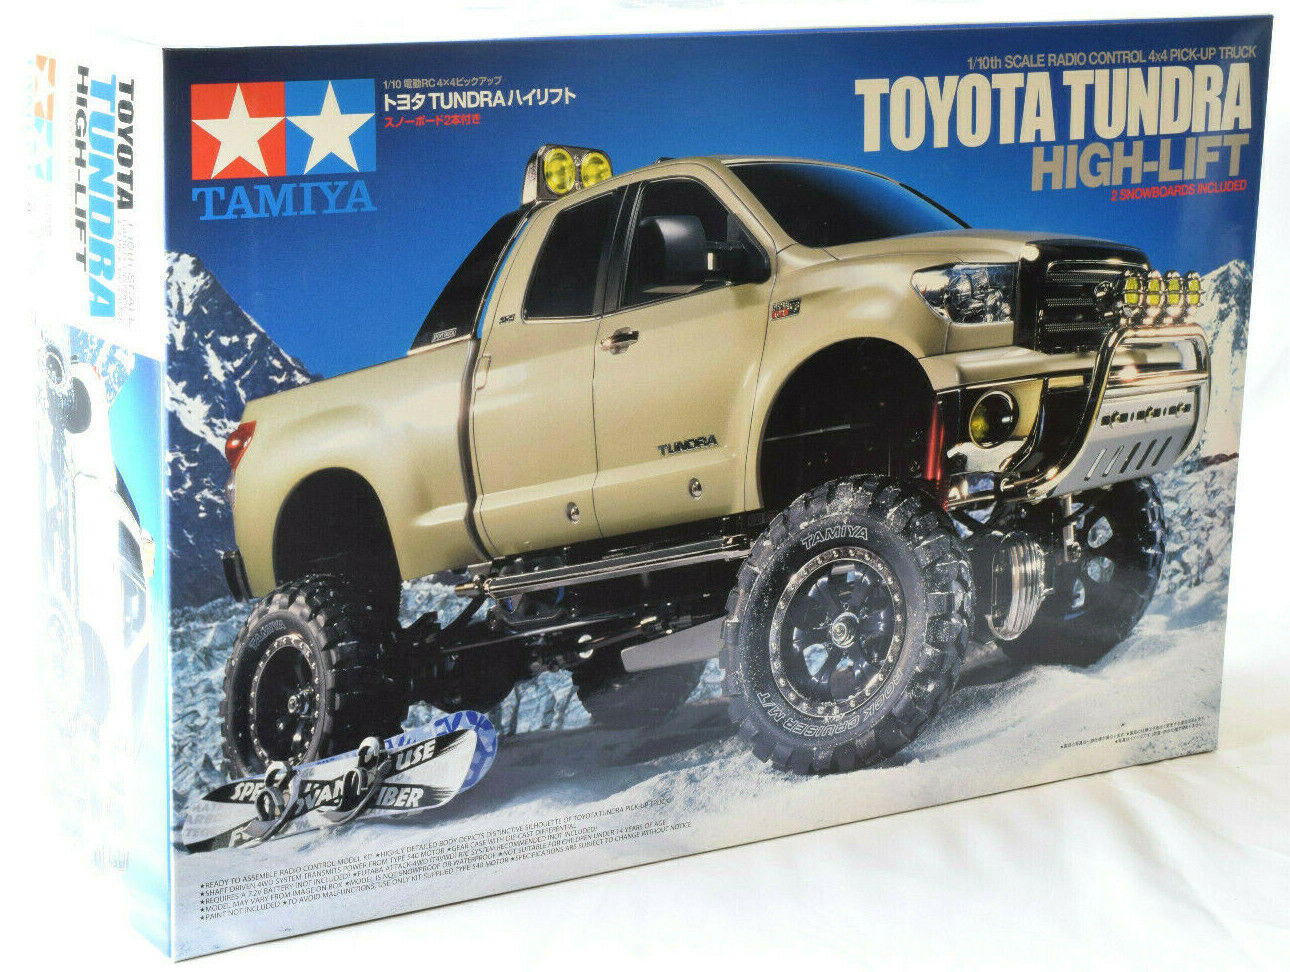 Tamiya Toyota Tundra High-Lift 1/10 4WD Electric RC Truck Kit 58415